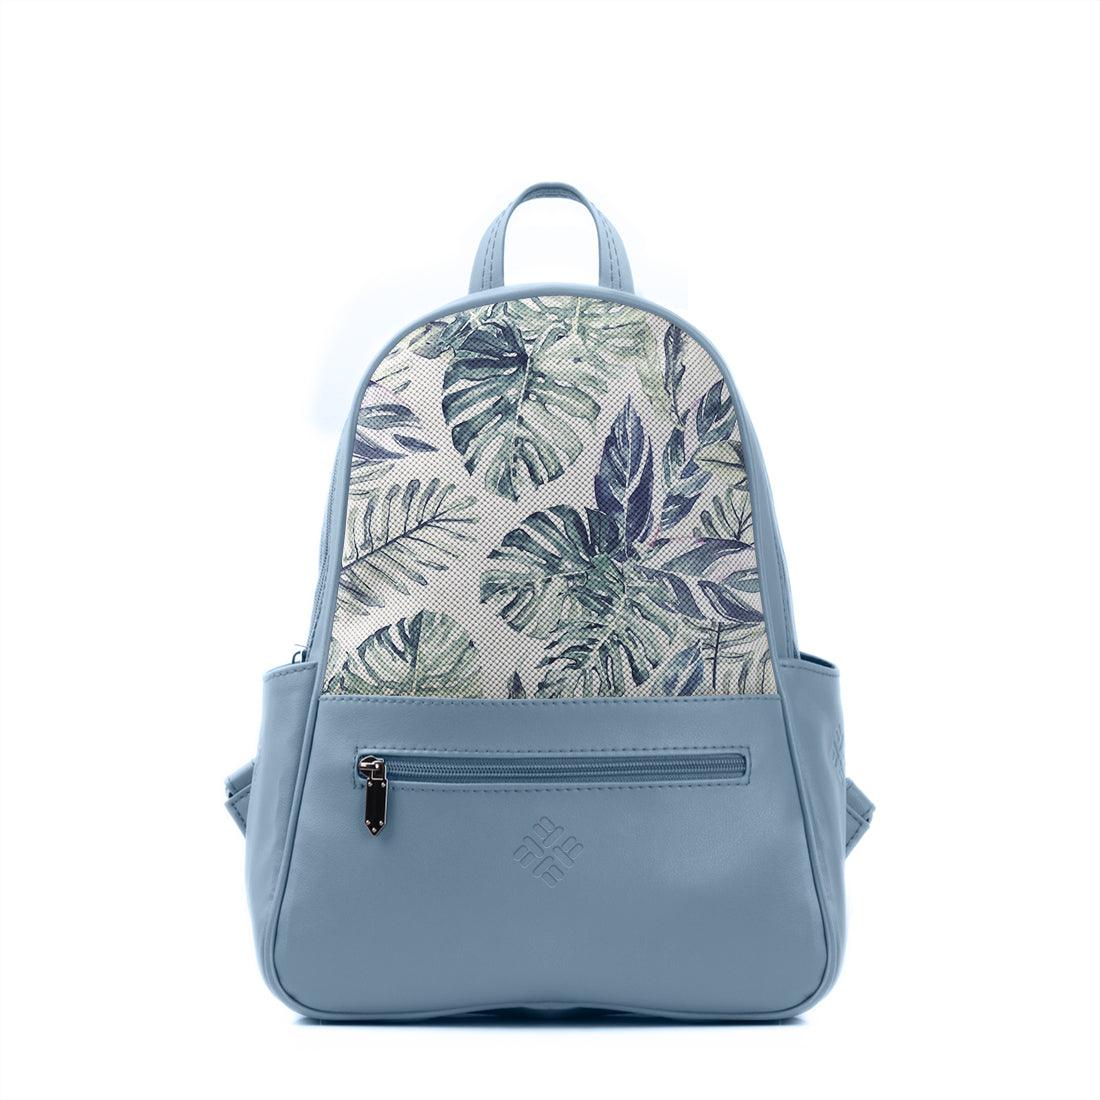 Blue Vivid Backpack Watercolor Tropical